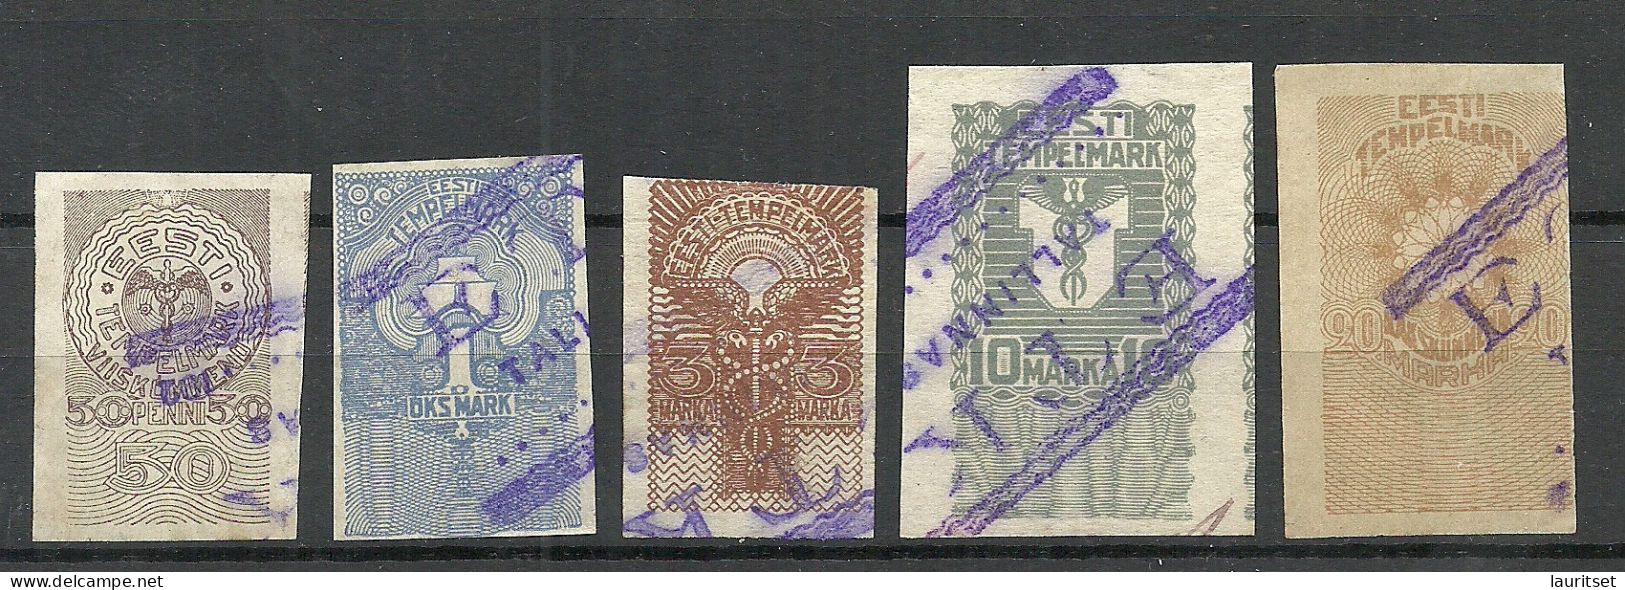 ESTLAND Estonia 1919 Stempelmarken Documentary Tax First Issue, 5 Stamps, O - Estonia